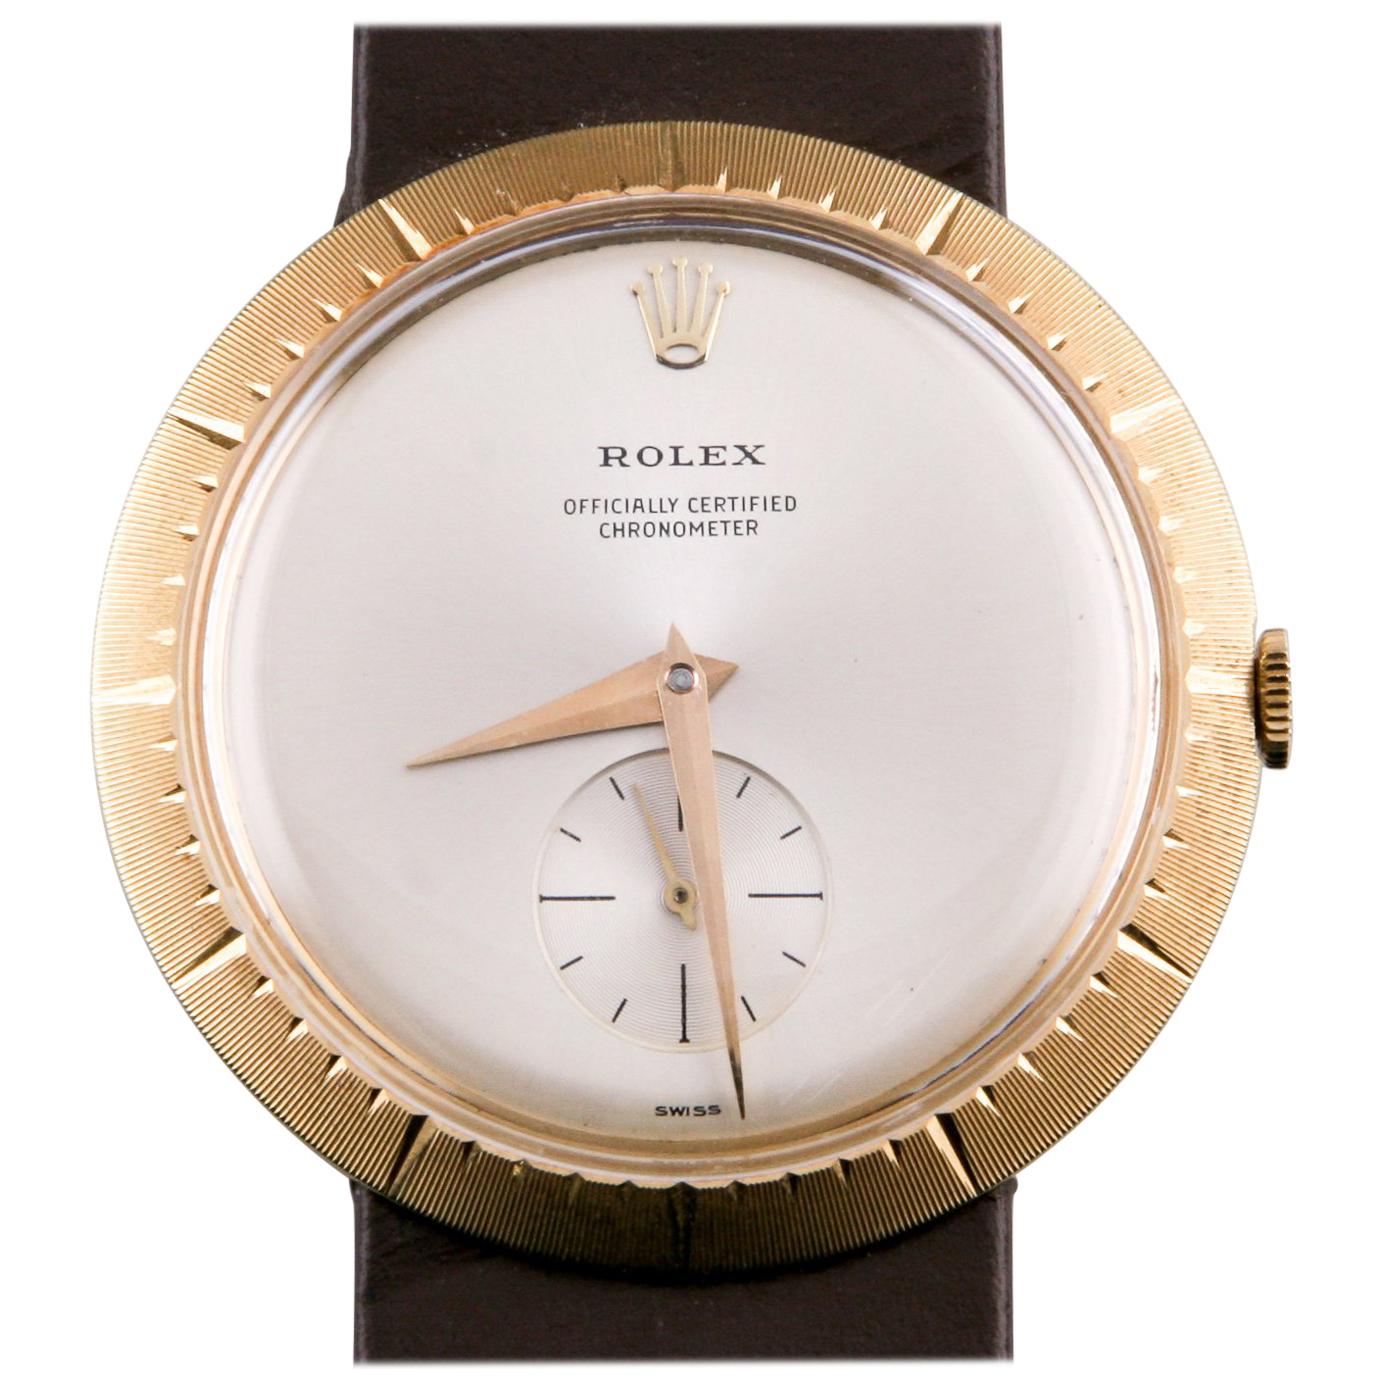 Rolex Modele de Depose 9522 18 Karat Gold Hand-Winding Watch with Box Papers